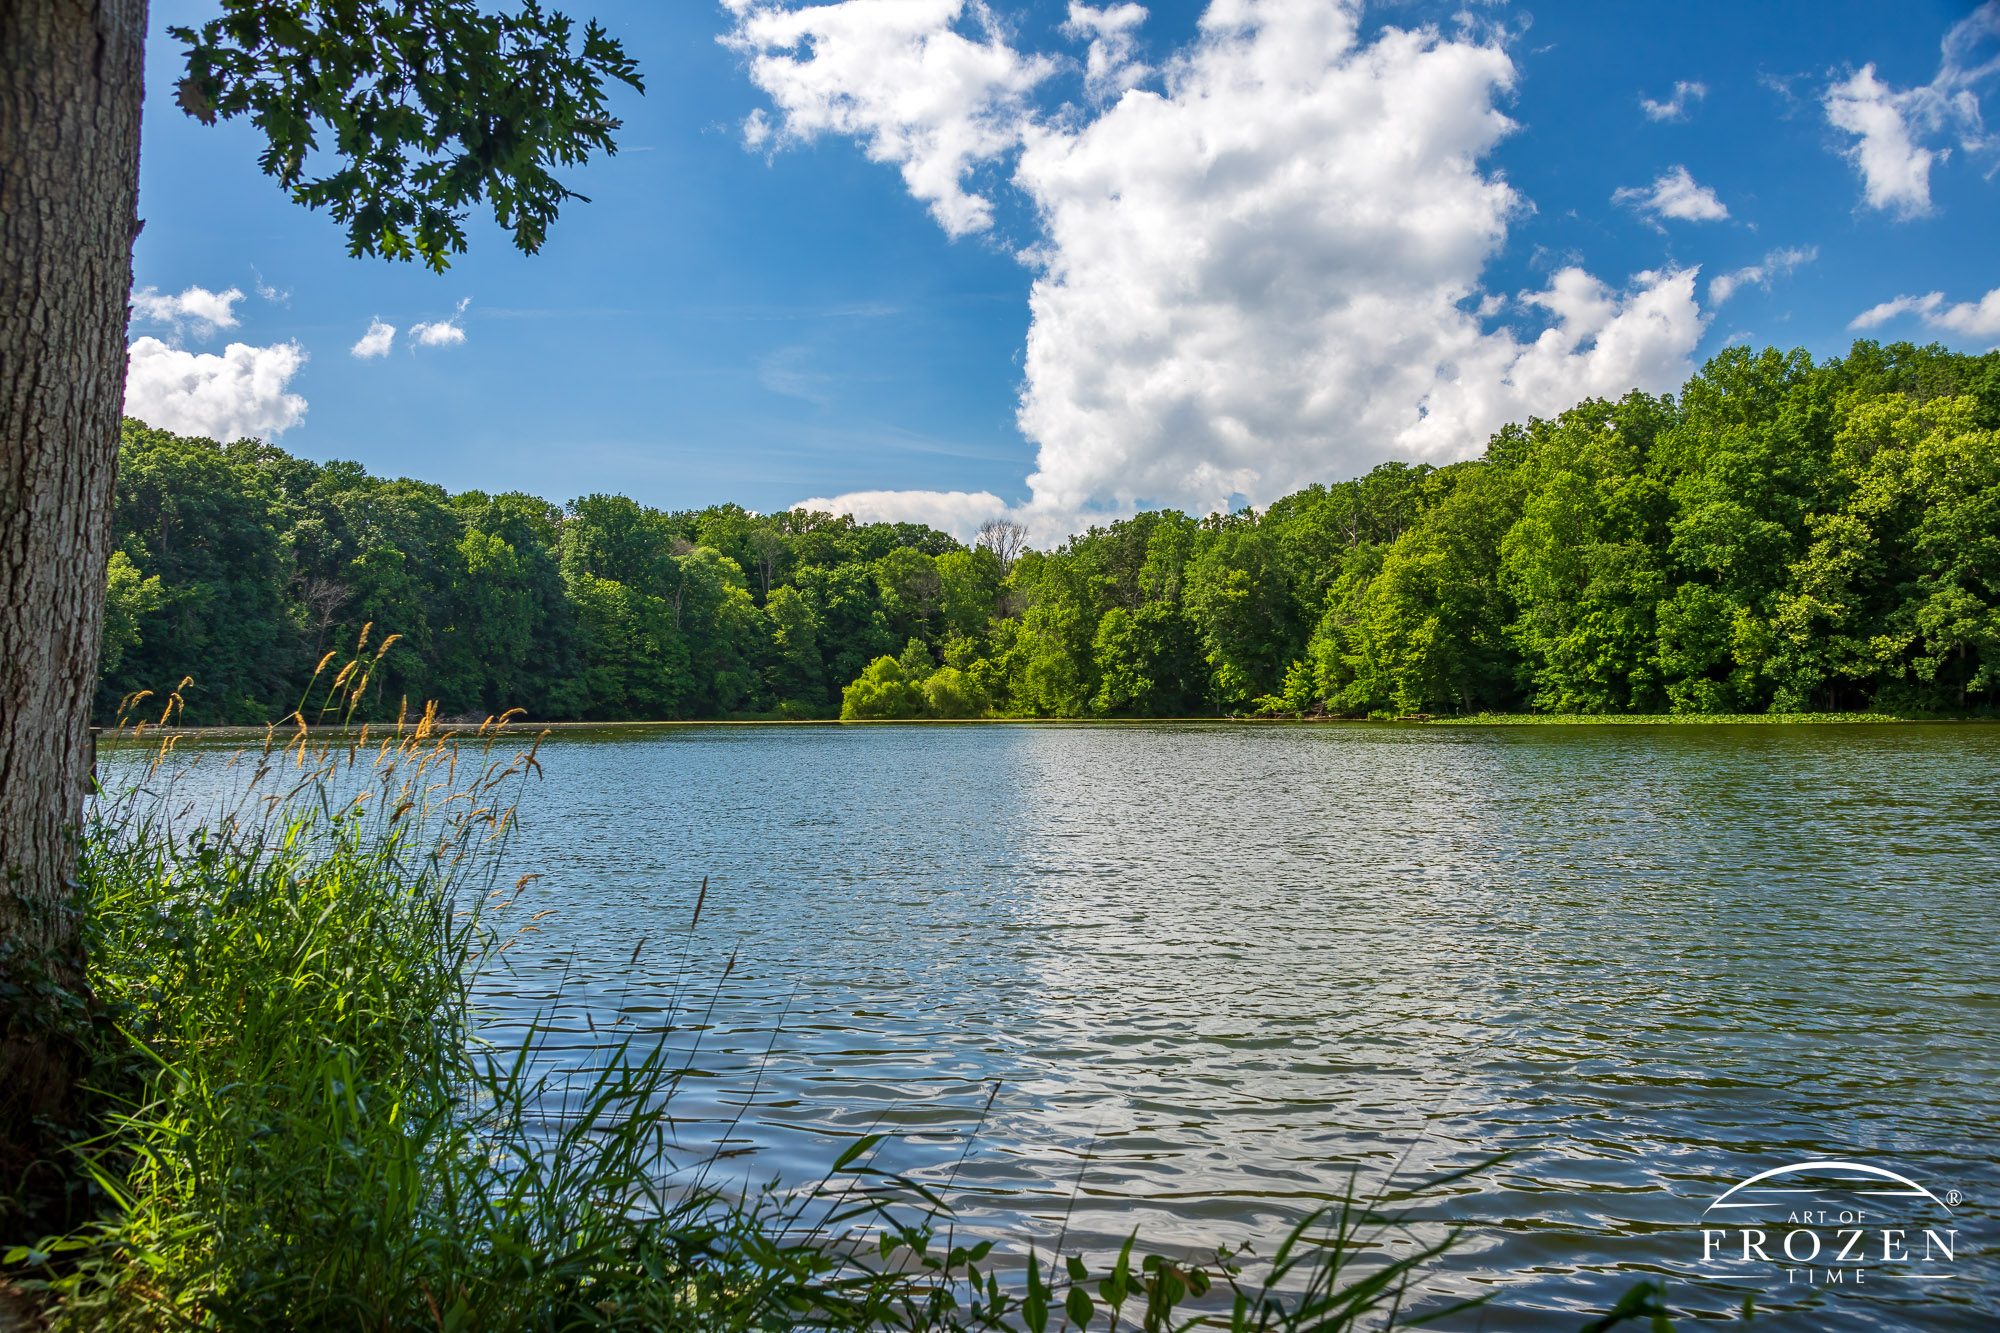 An Ohio lake scene at Hosterman Lake near Enon Ohio showing a tree-lined lake under blue skies